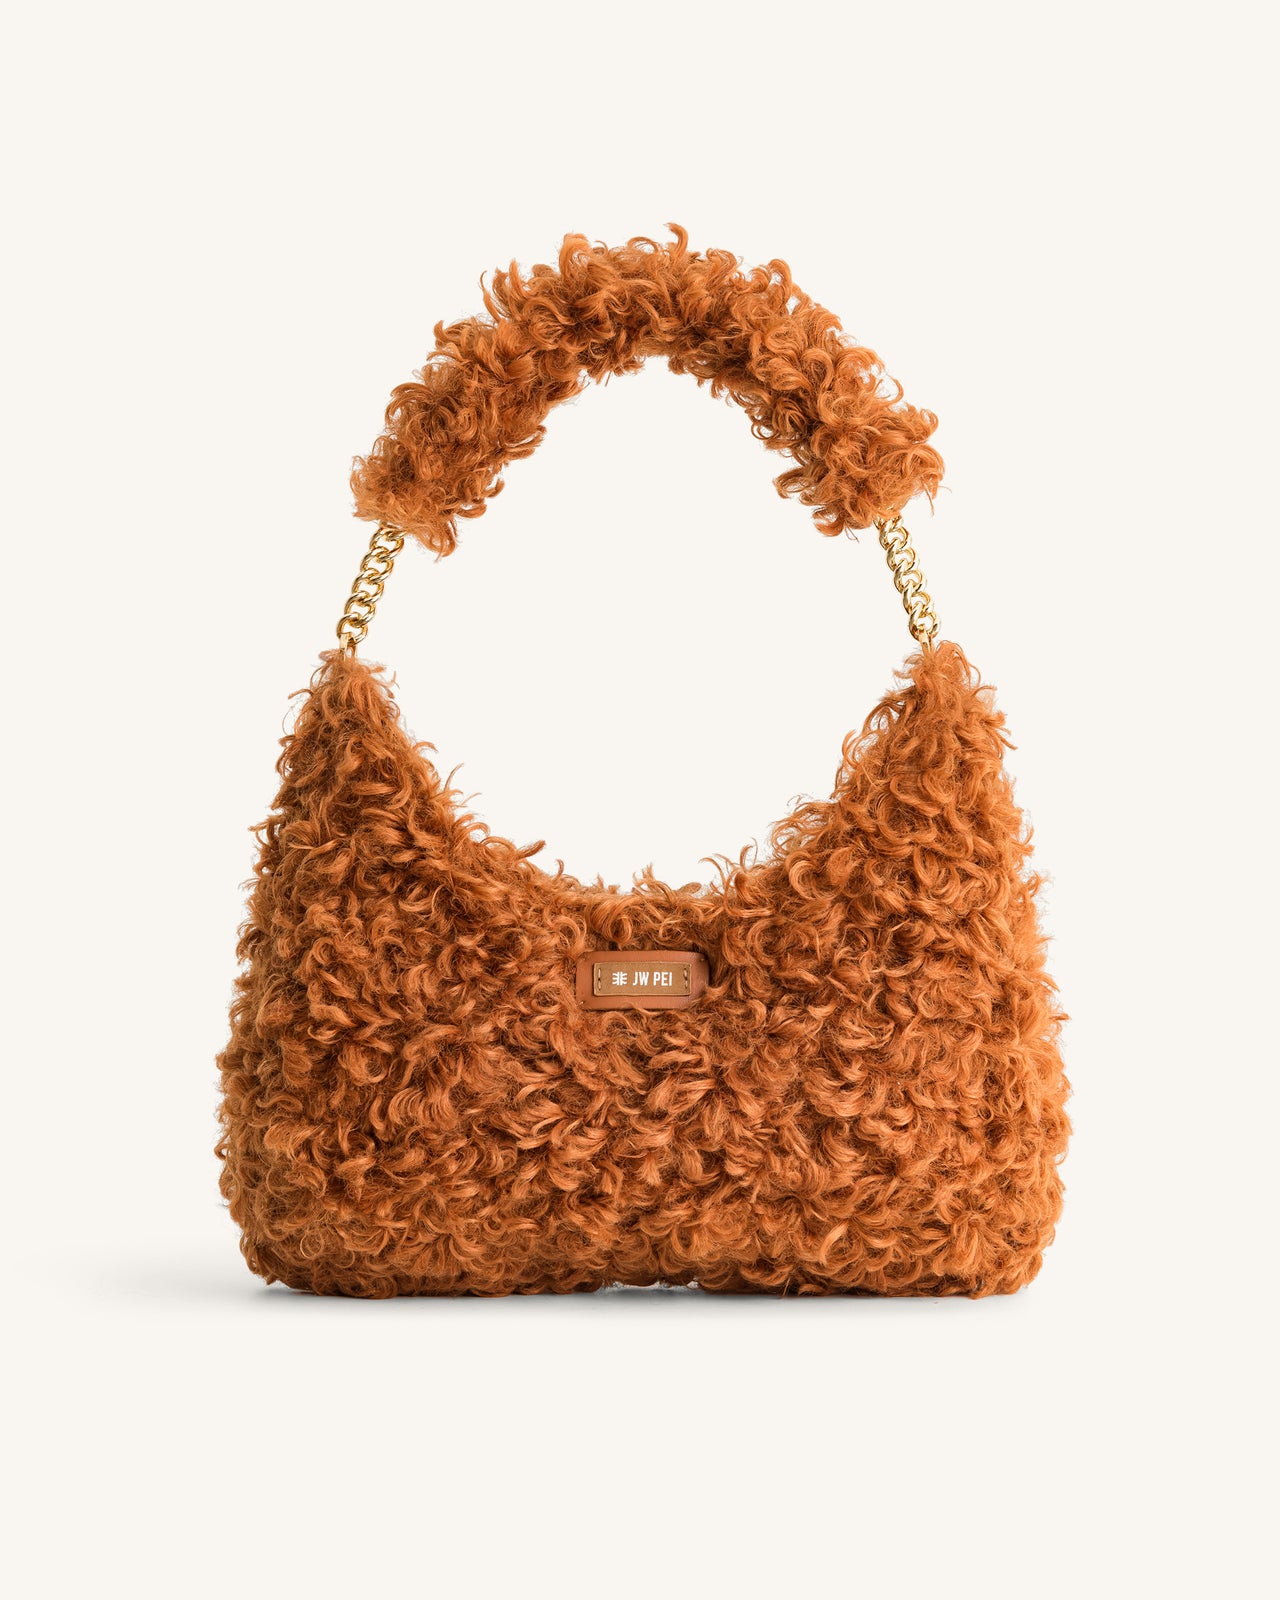 Eva Shoulder Handbag - Grass Green Ostrich - JW PEI